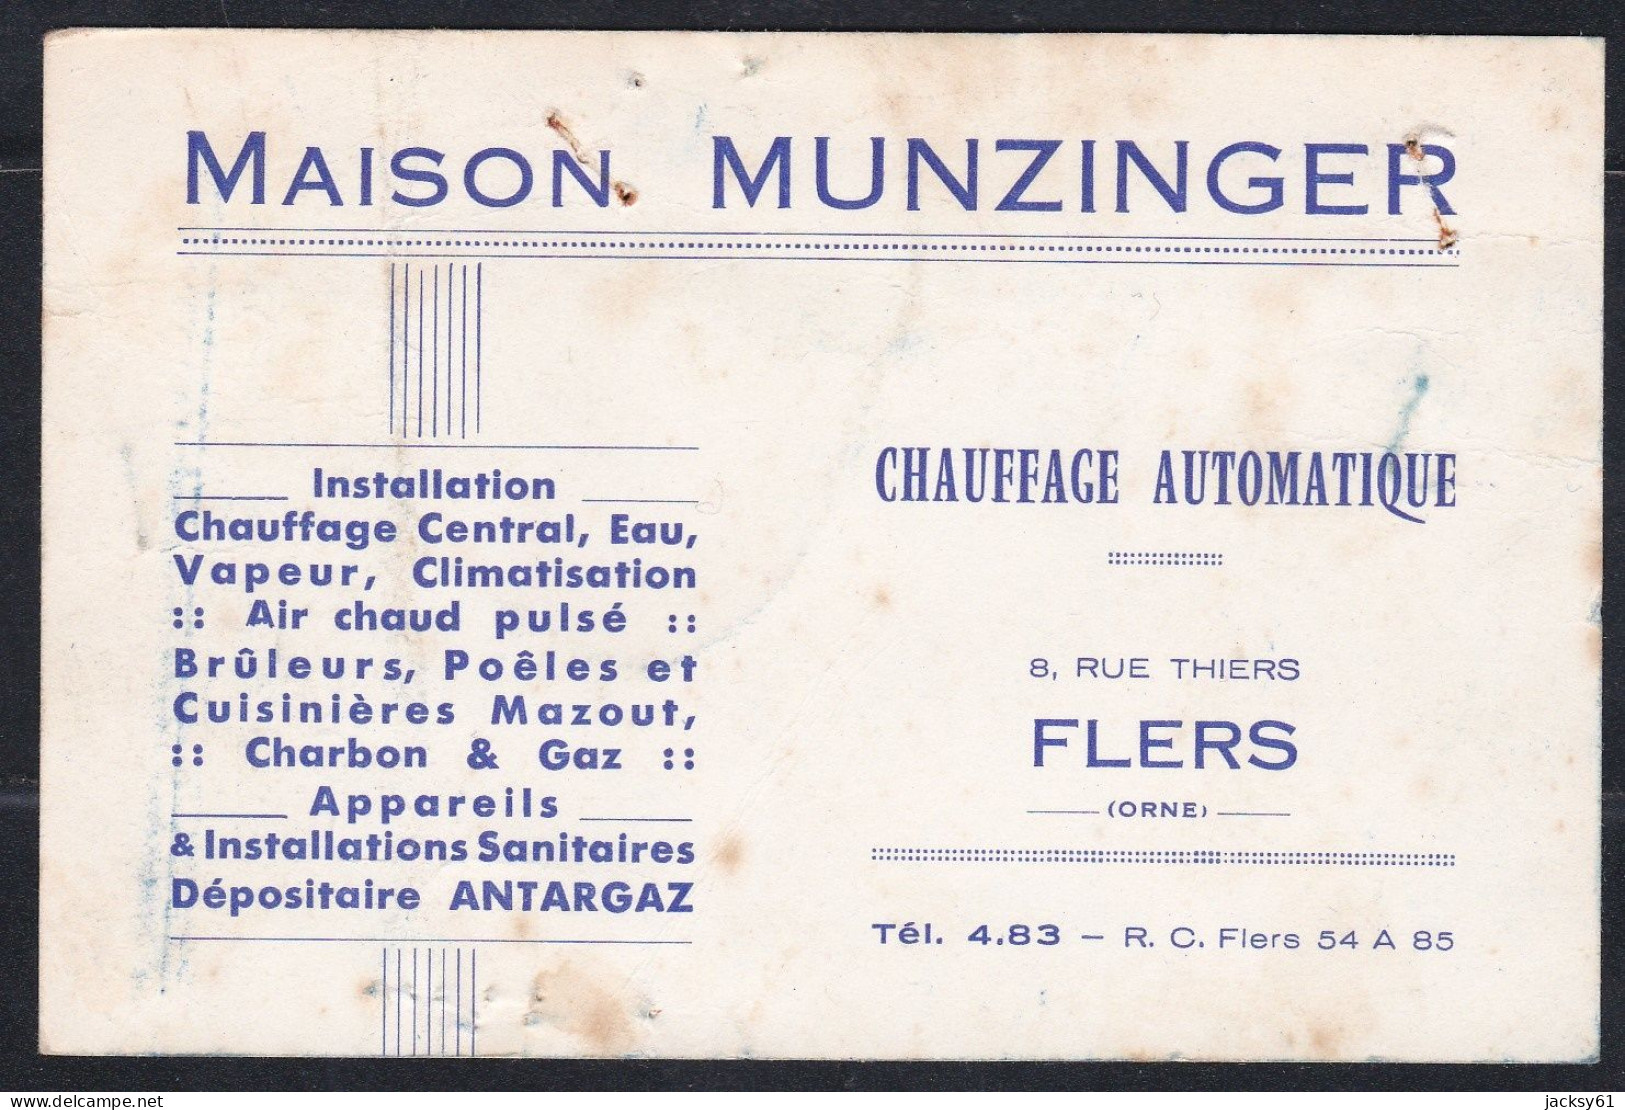 61 - Flers - Maison Munzinger - Chauffage Automatique - Cartoncini Da Visita